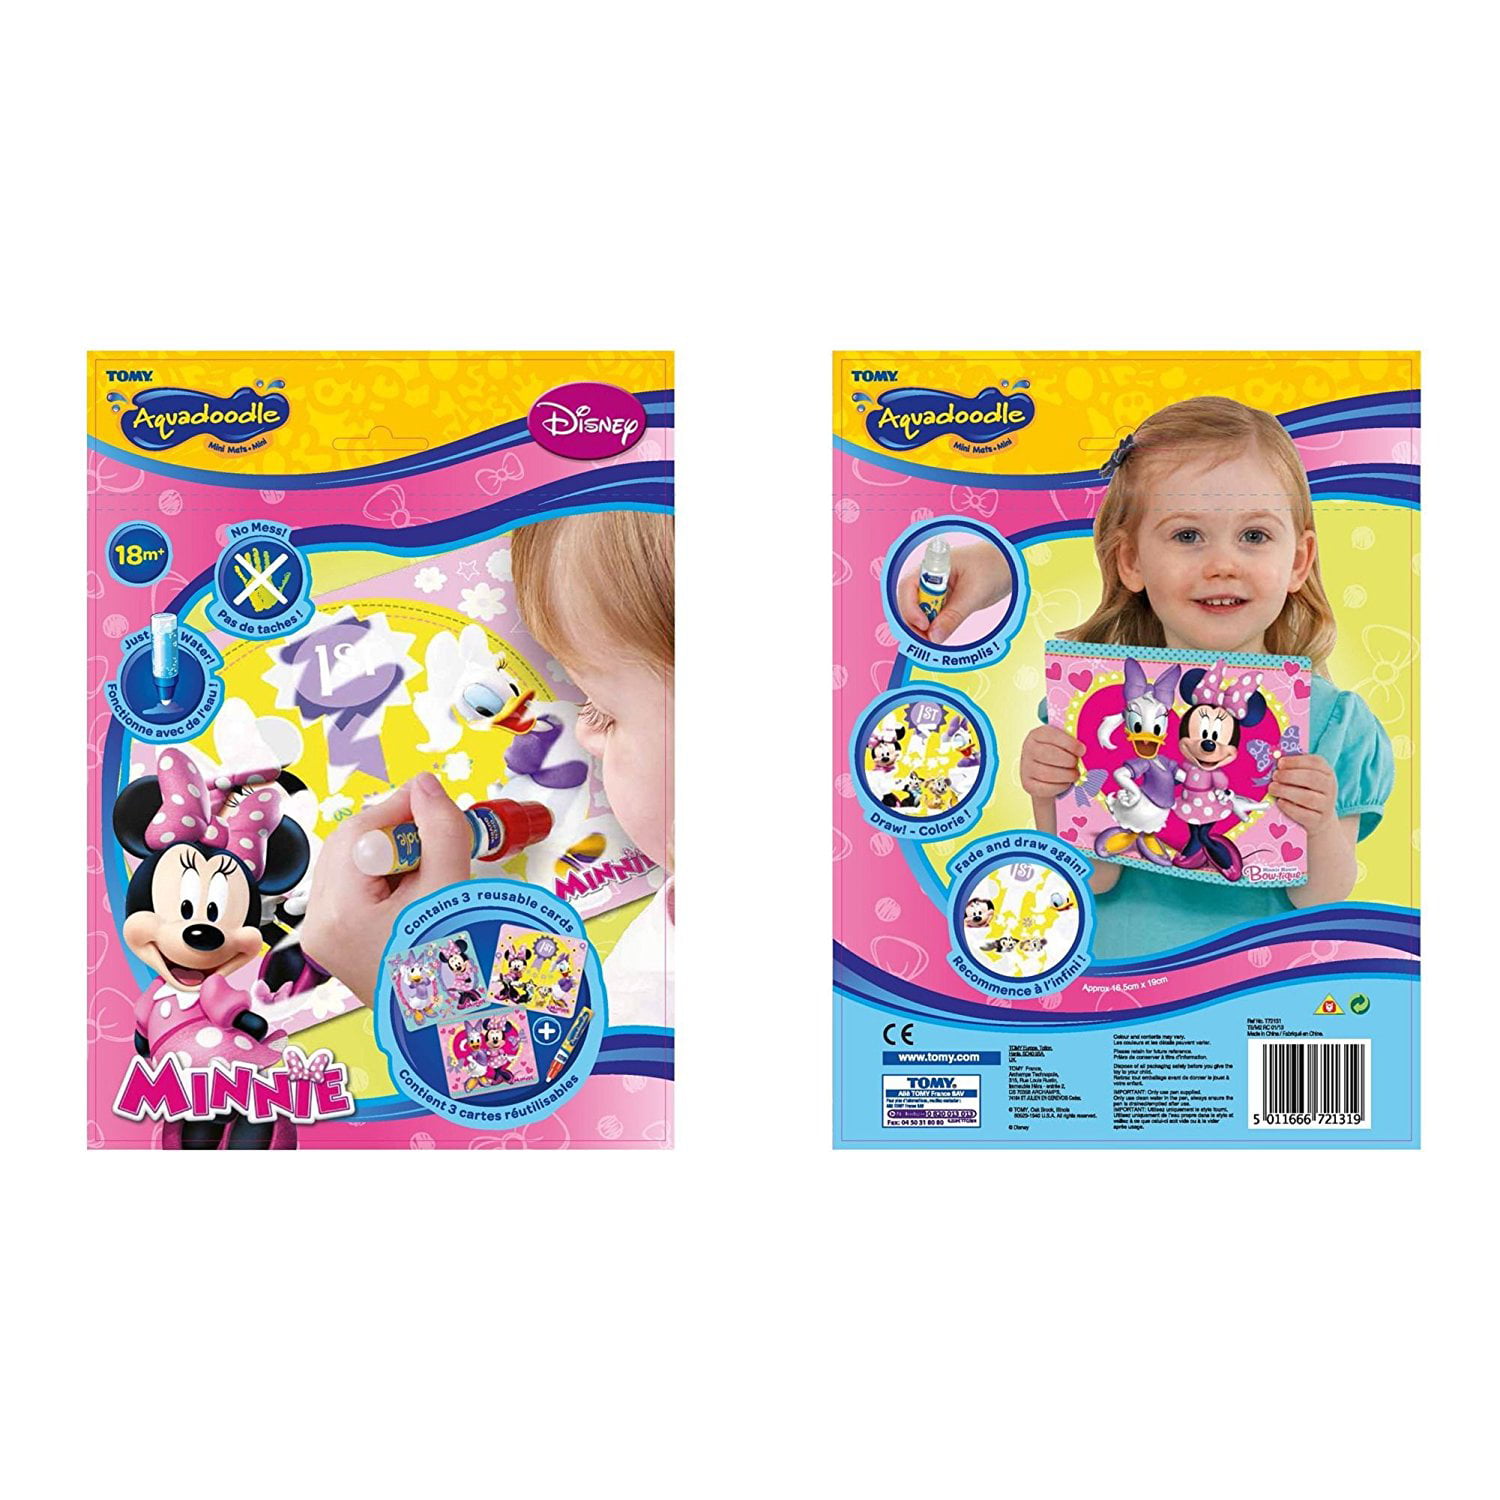 Mickey Mouse Minnie Mouse TOMY Aquadraw Aquadoodle Mini Mats Disney Princess 